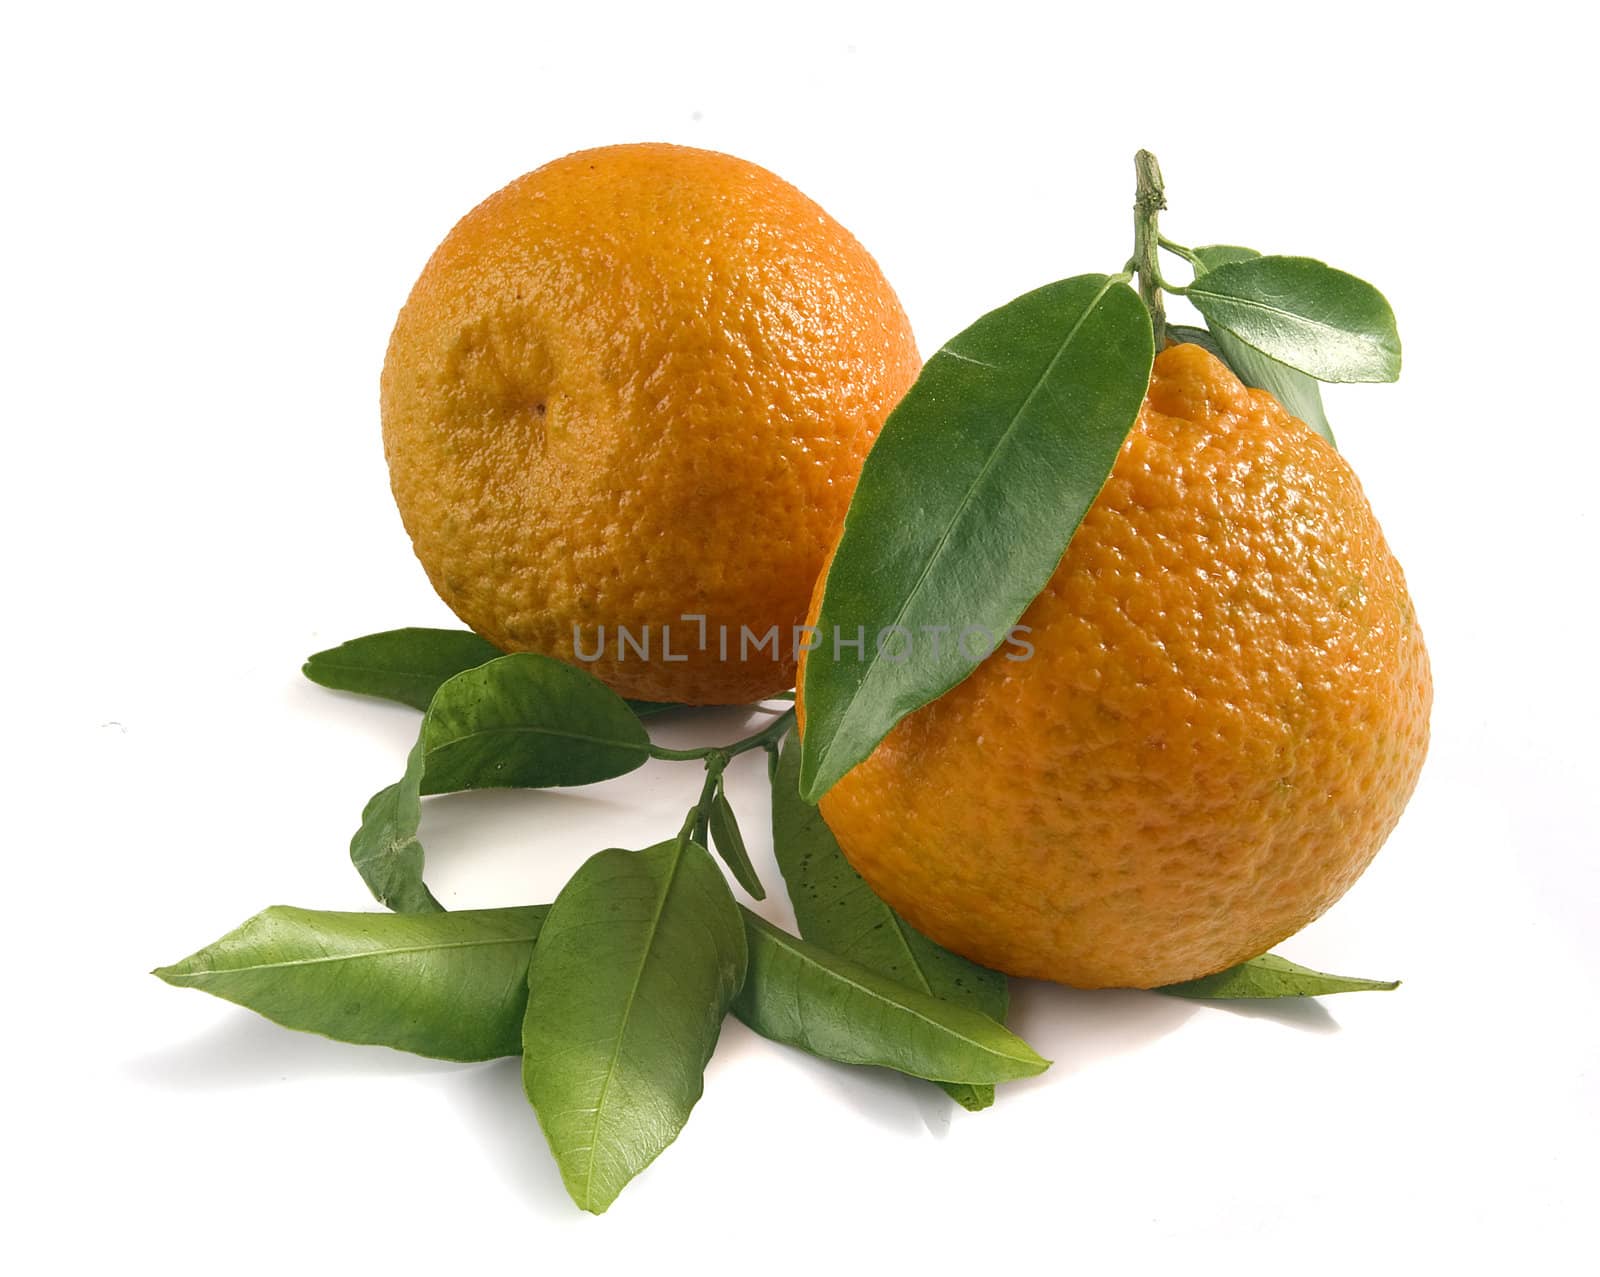 Two orange tangerines on the green fresh tangerine's leafs